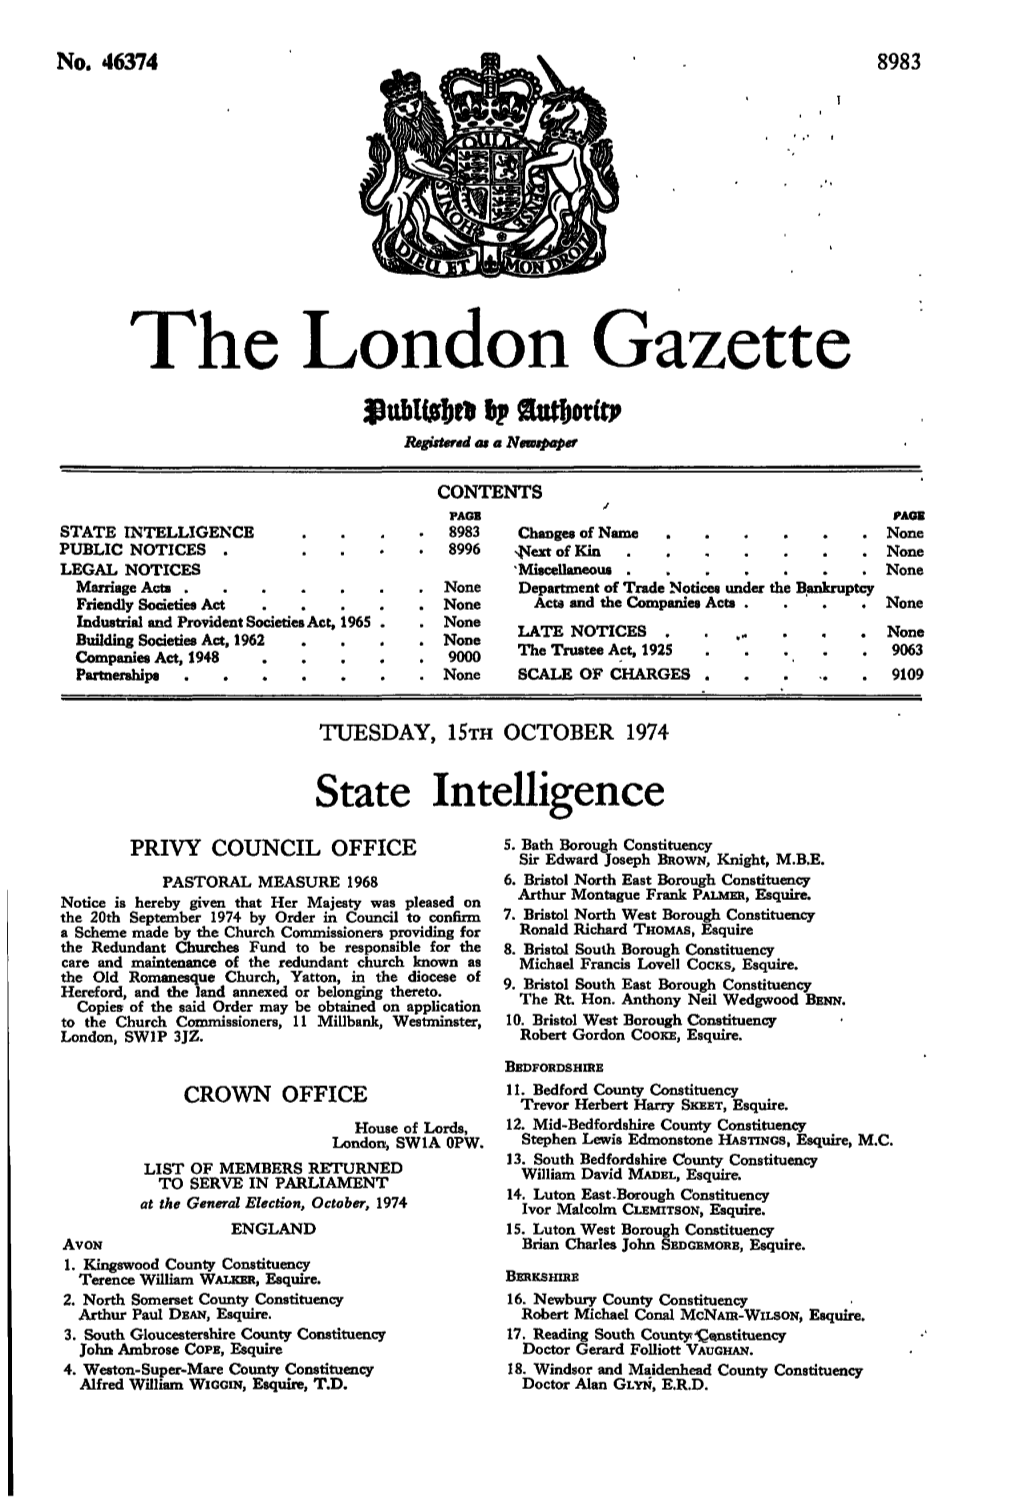 The London Gazette, Issue 46374